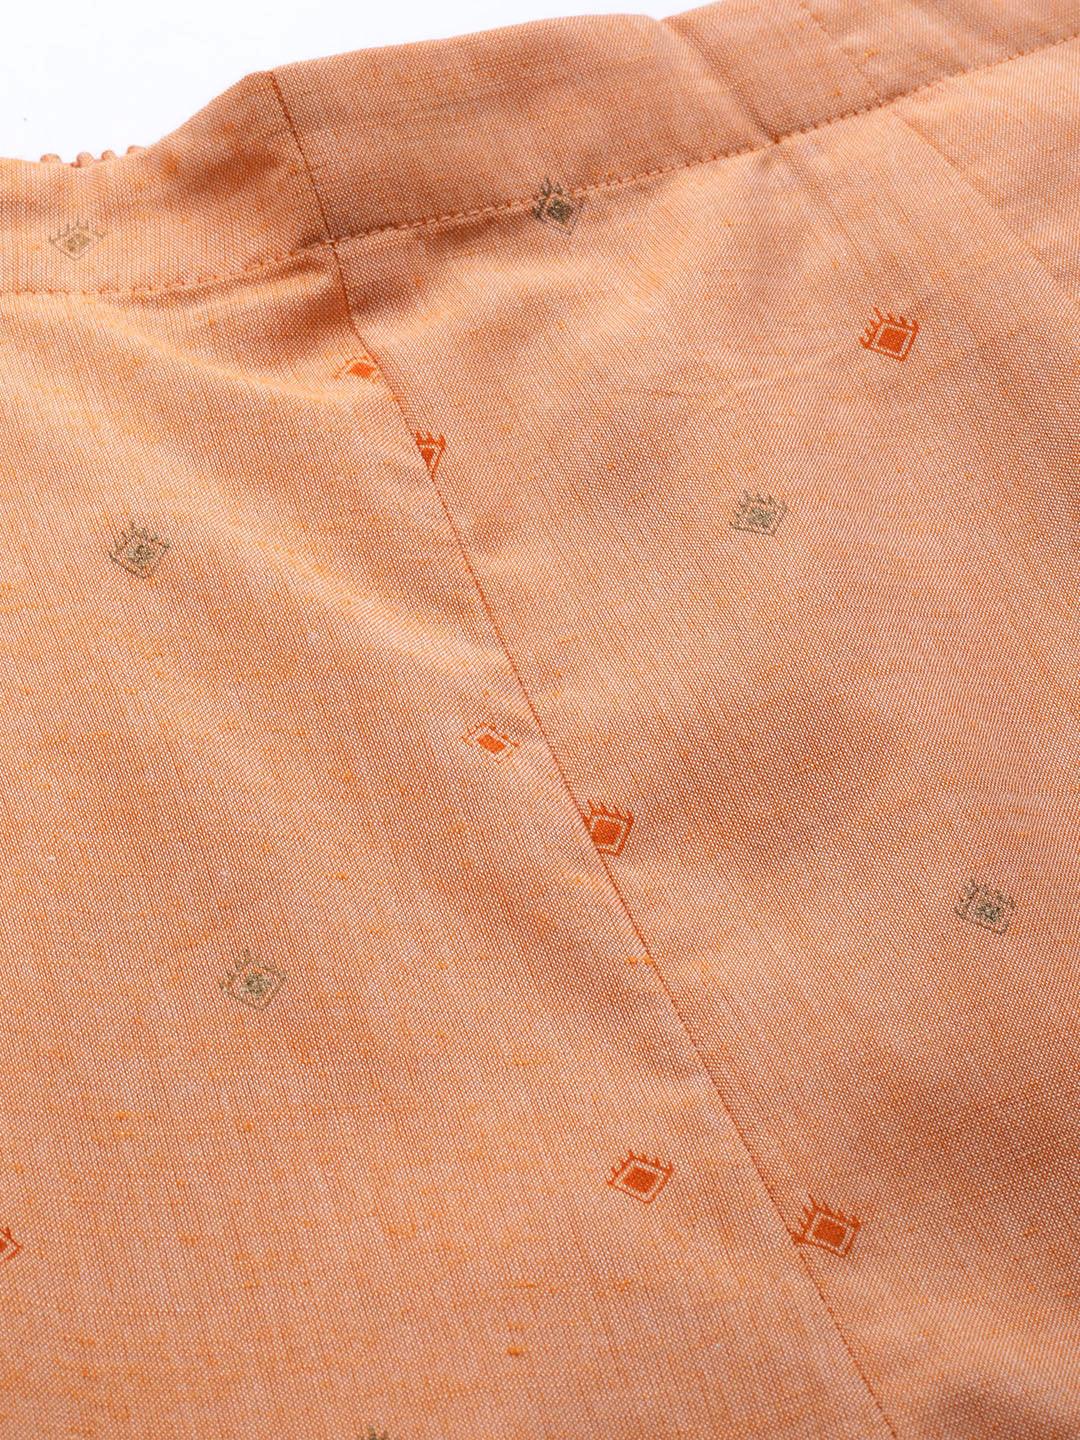 Orange Printed Cotton Trousers